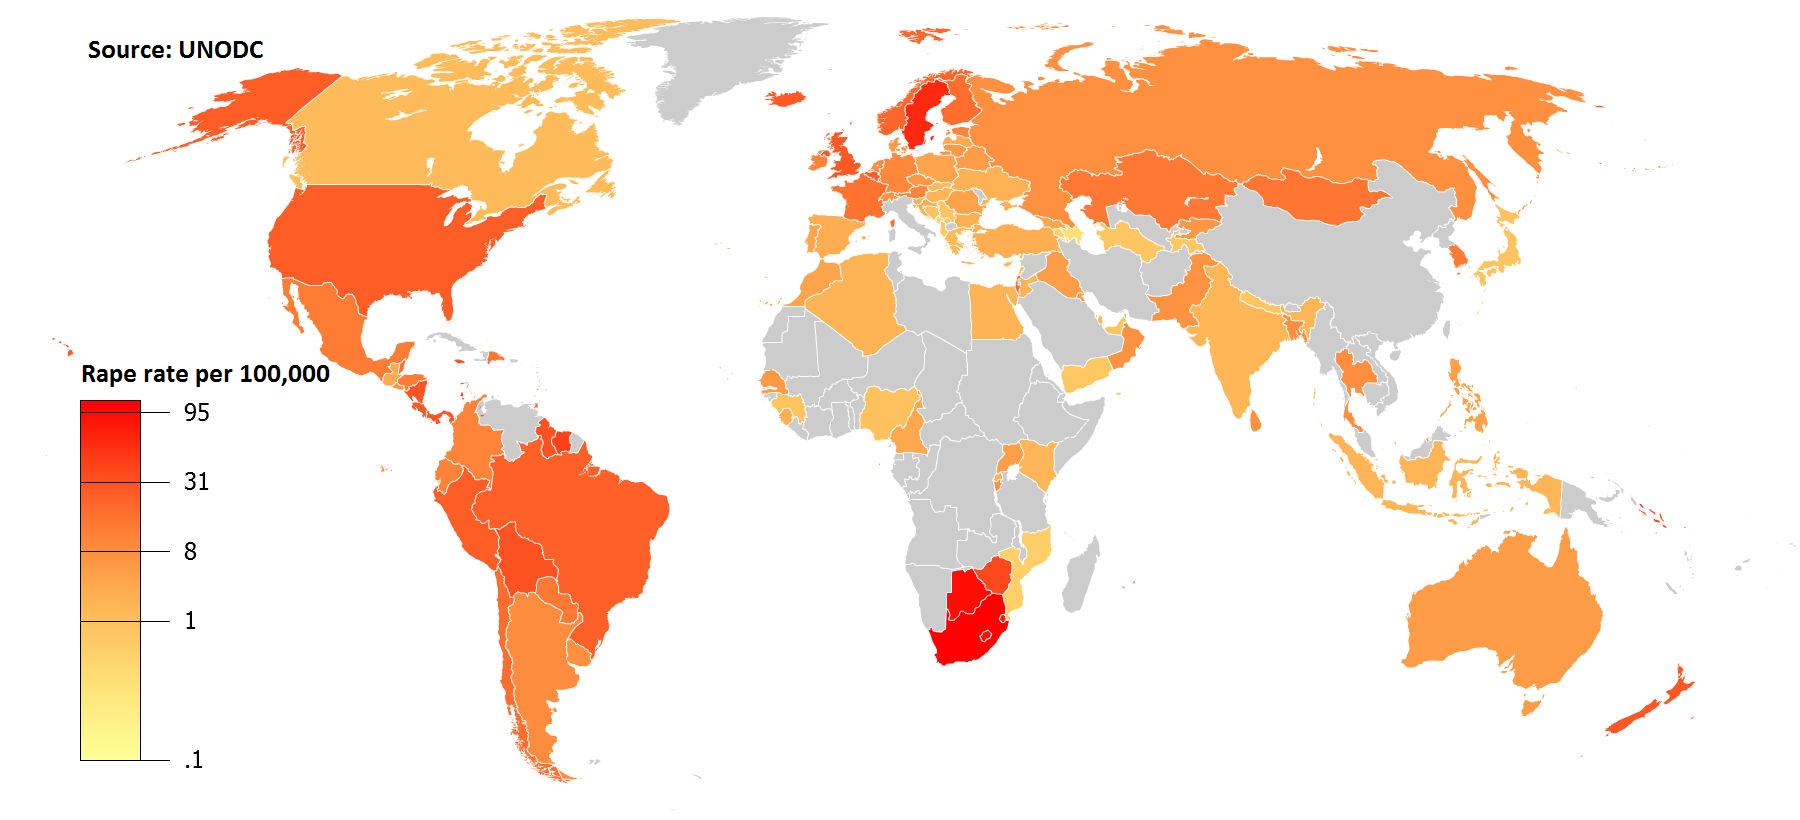 %28A%29_Rape_rates_per_100000_population_2010-2012%2C_world.jpg